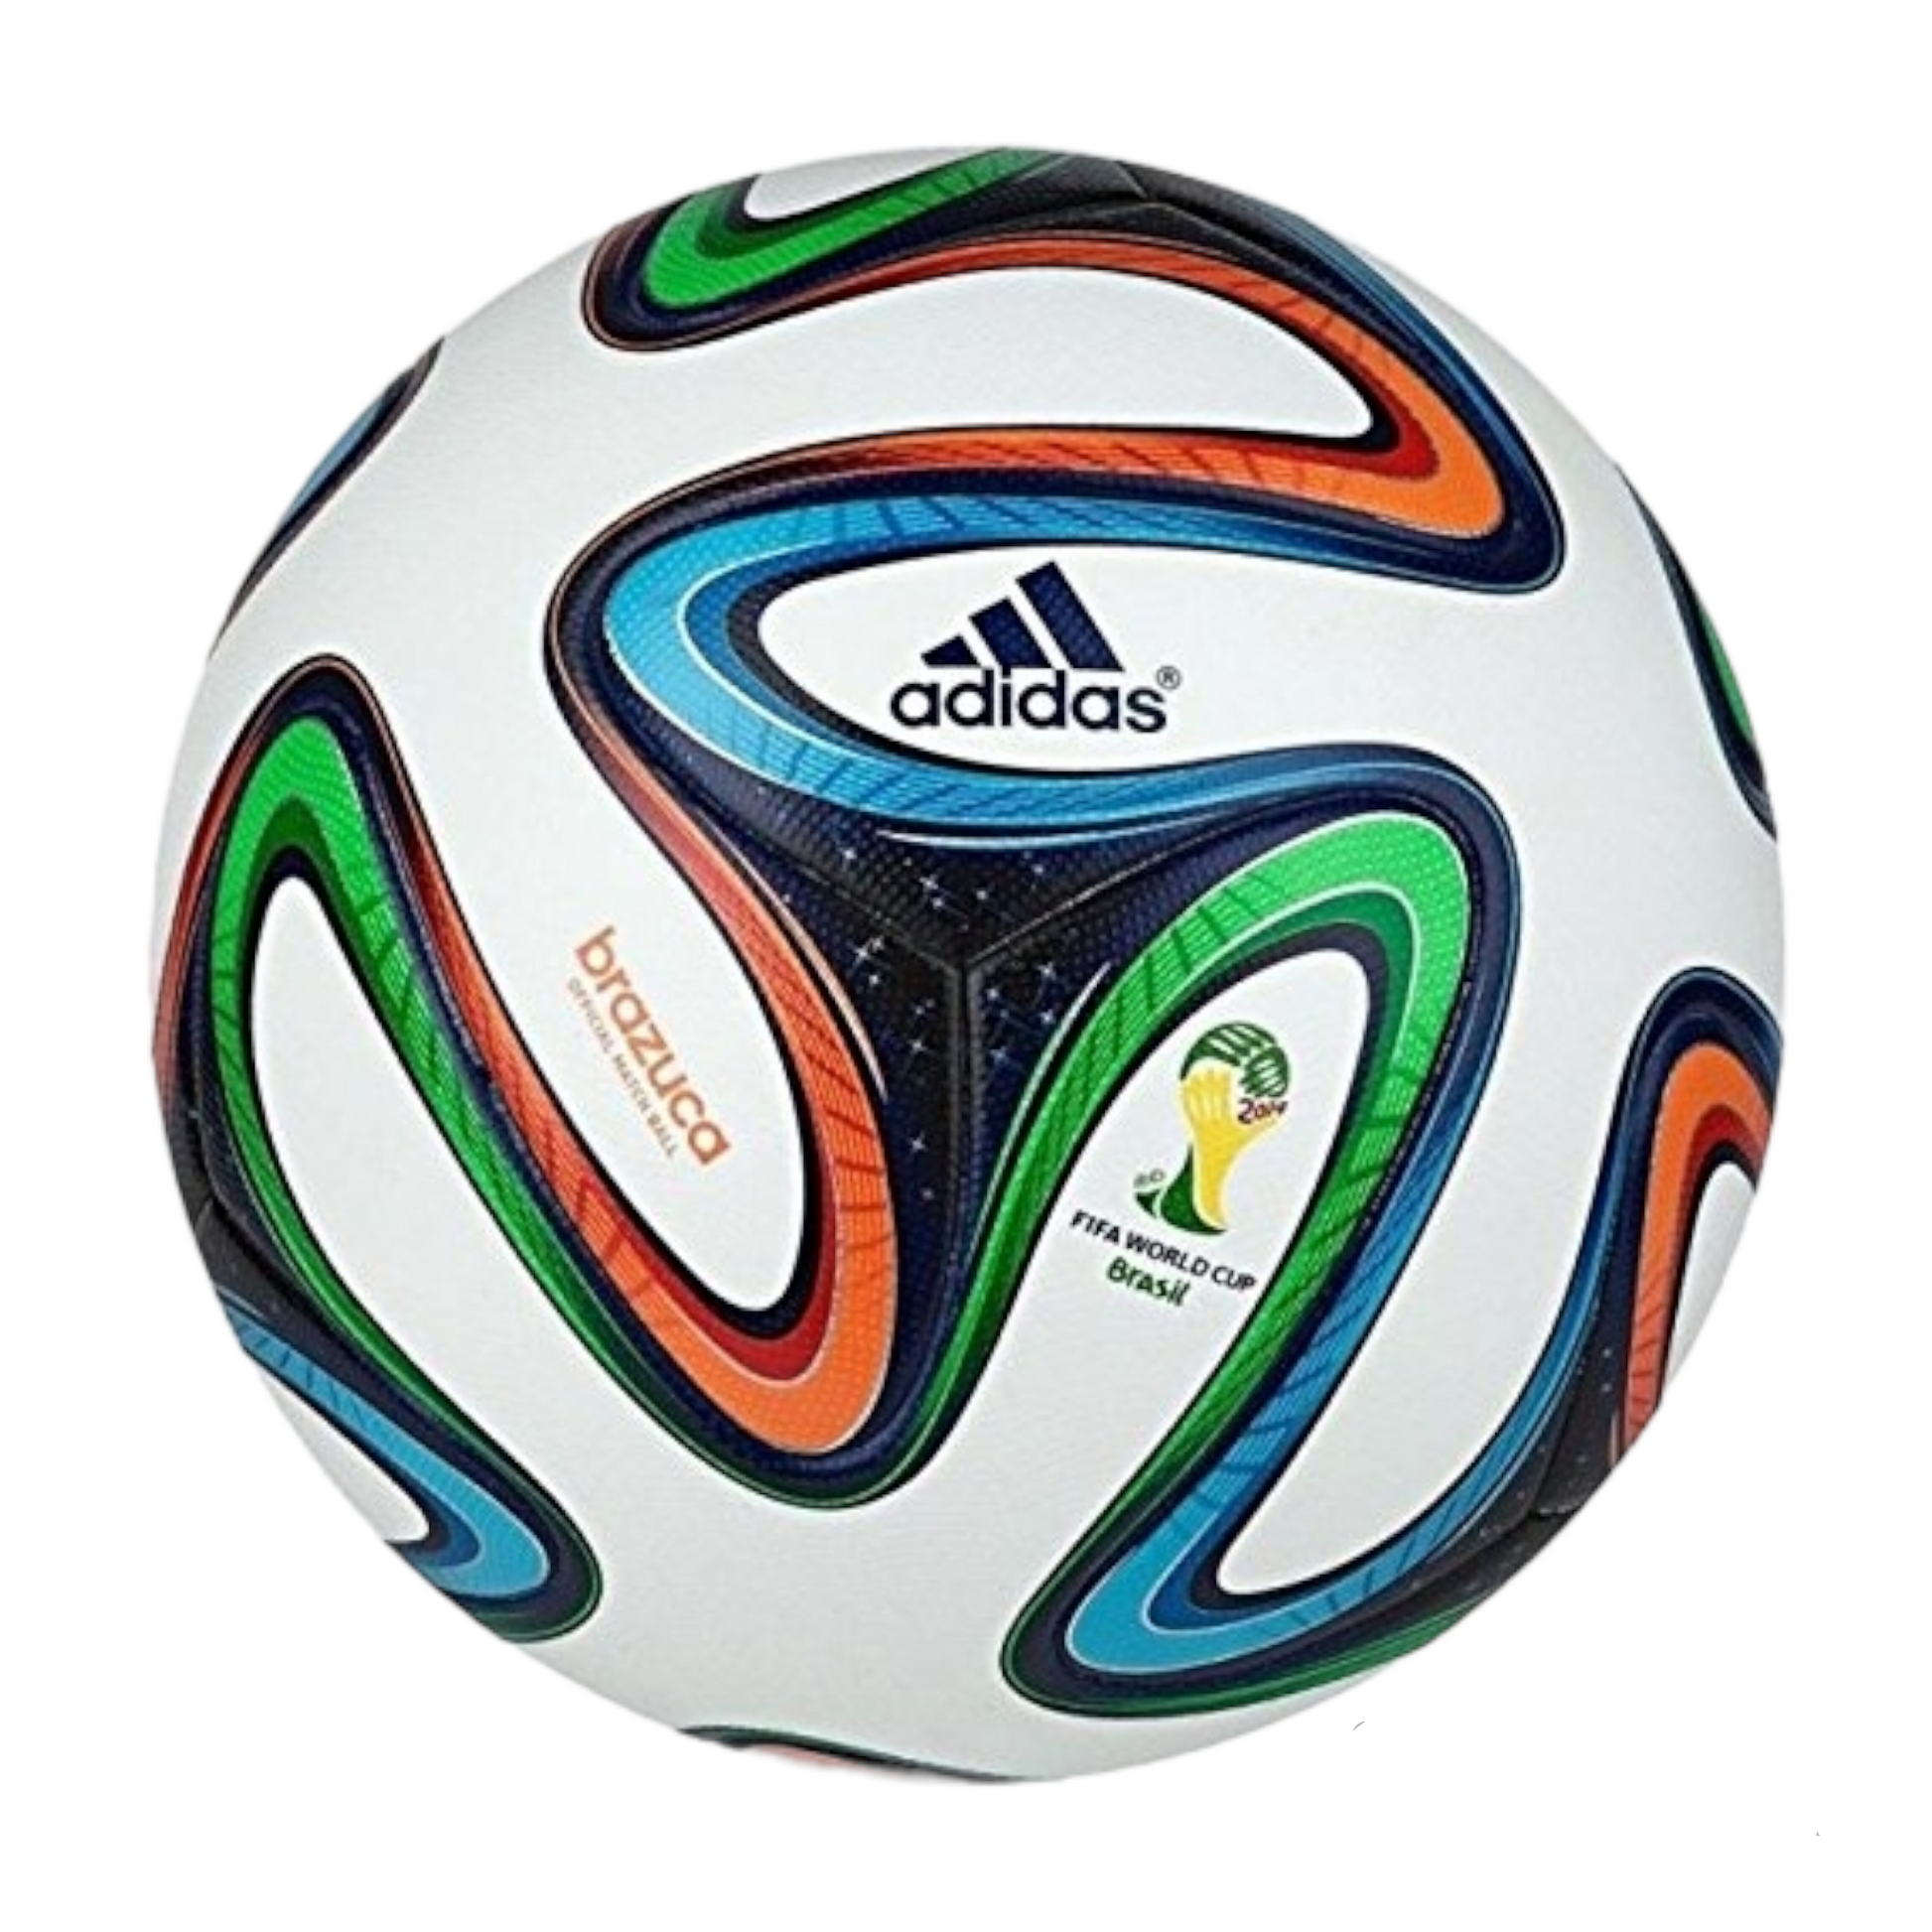 Adidas 2014 6-Panel Football – Sports